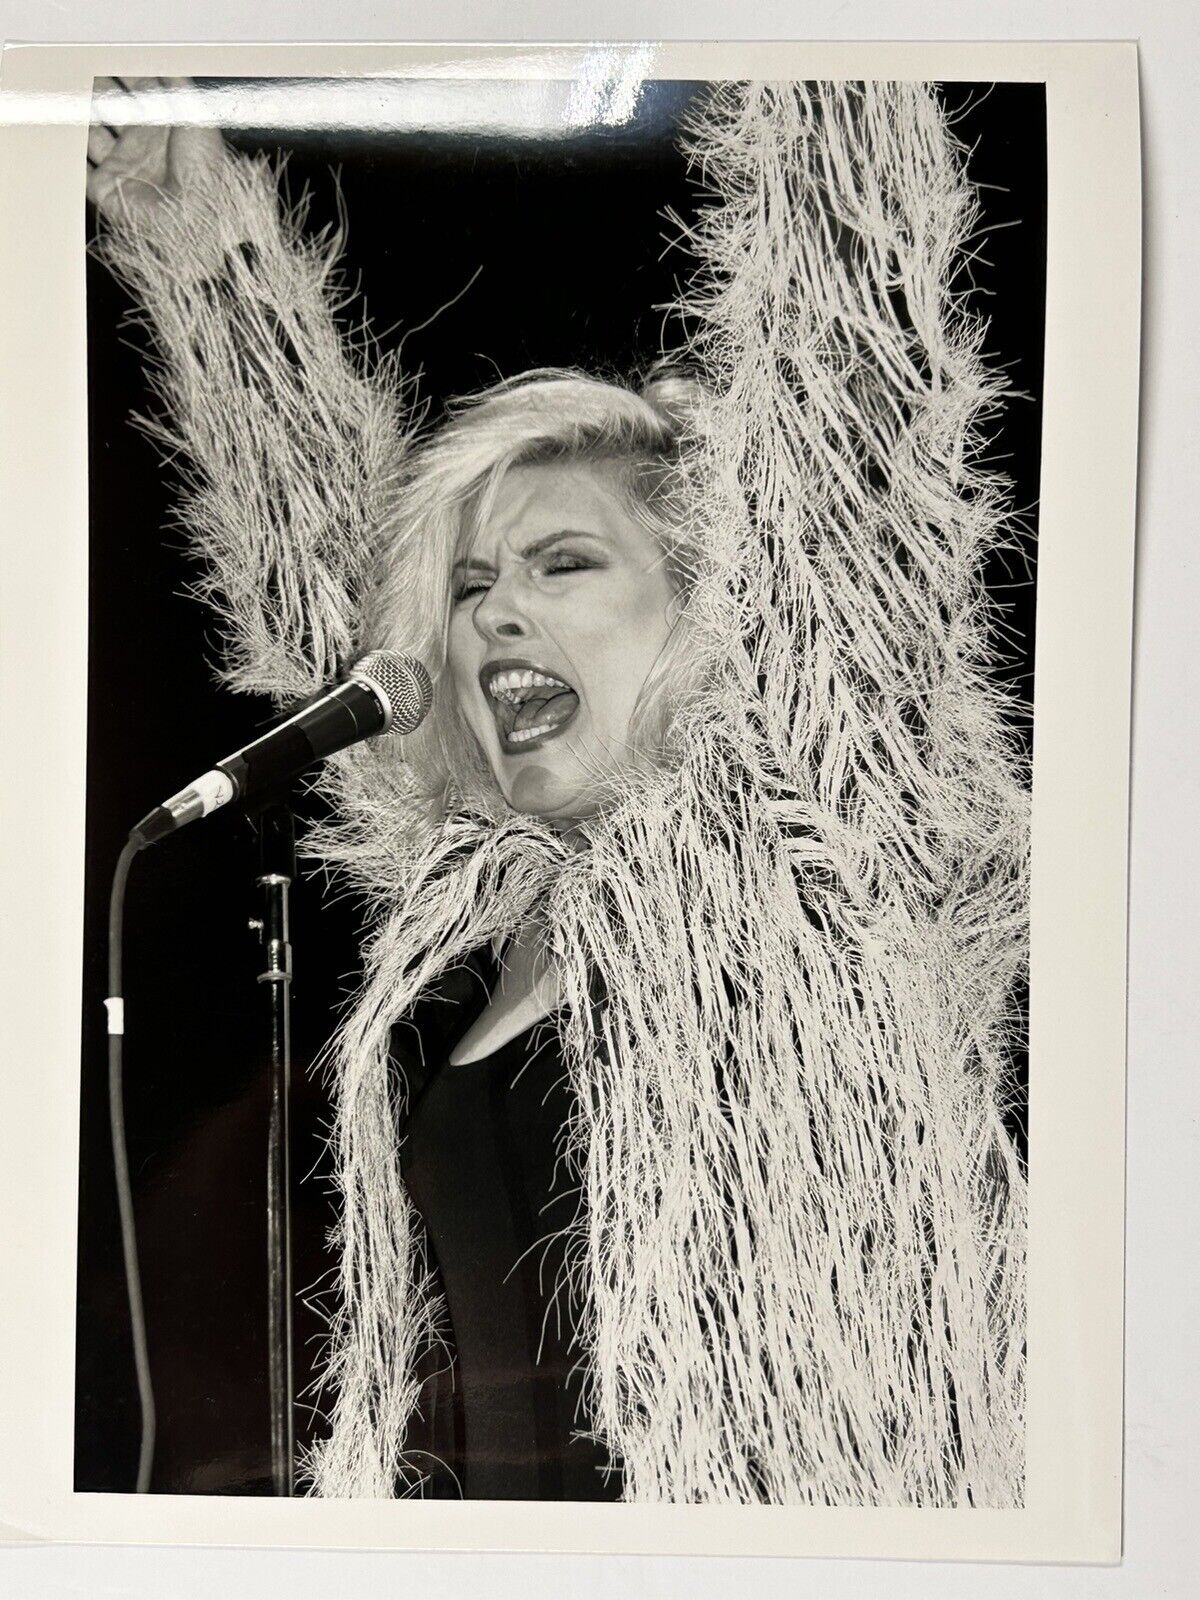 Debbie Harry Blondie Photograph Original Stamped Press Promo Circa Early 1980s